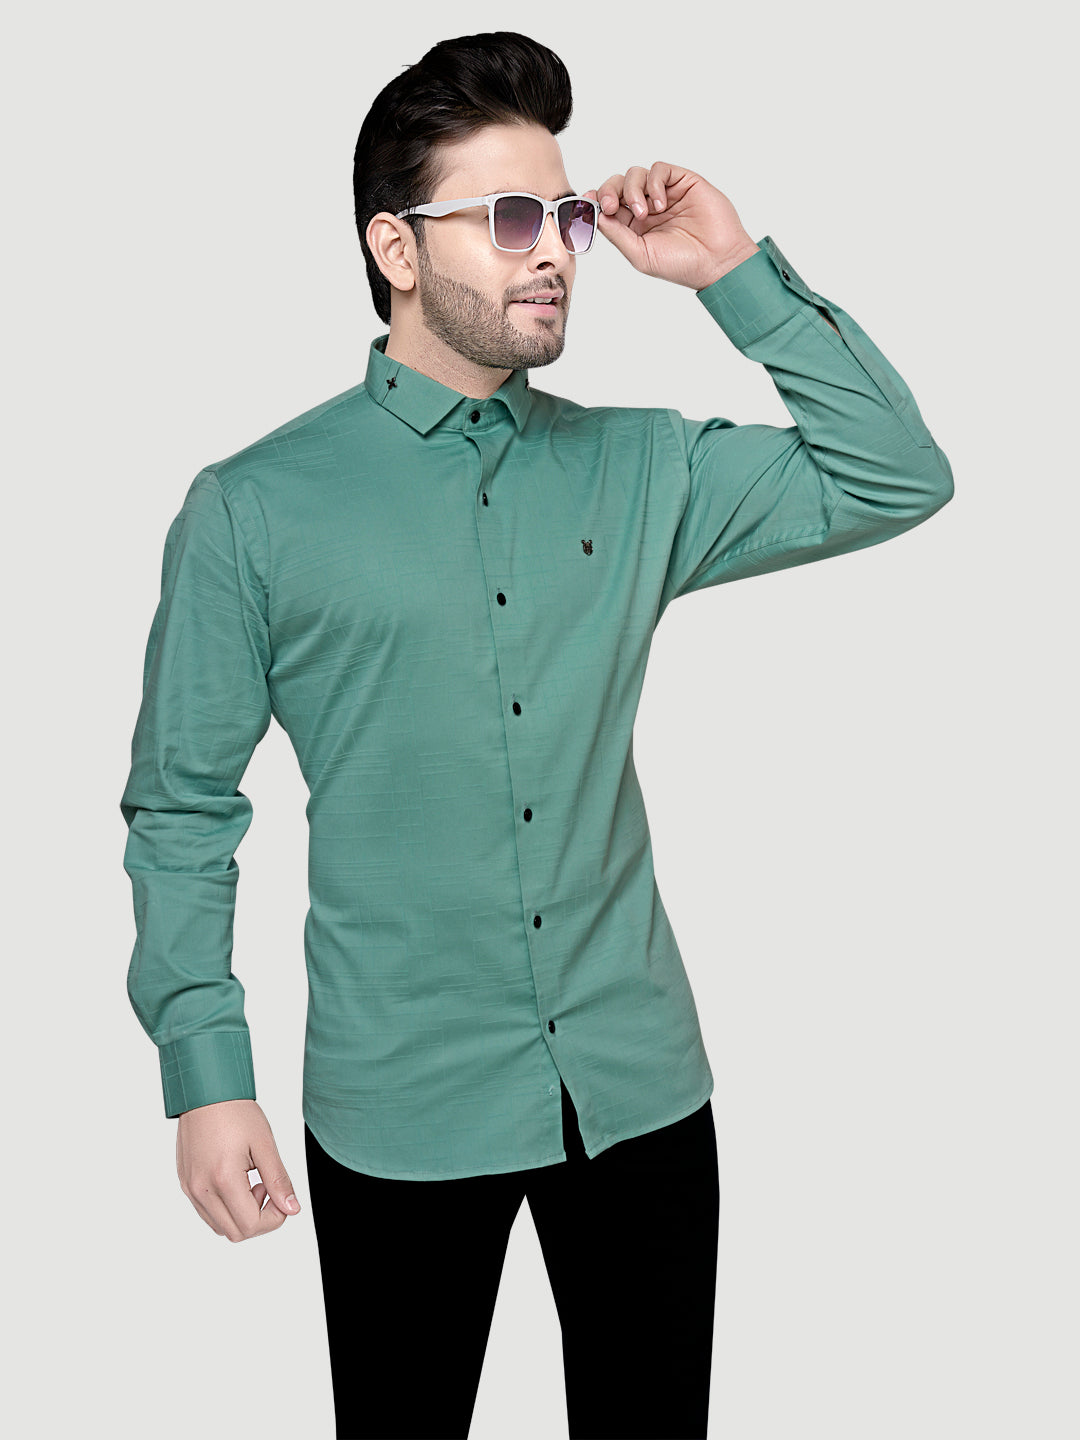 Men's Designer Shirt with Collar Accessory & Broach-5